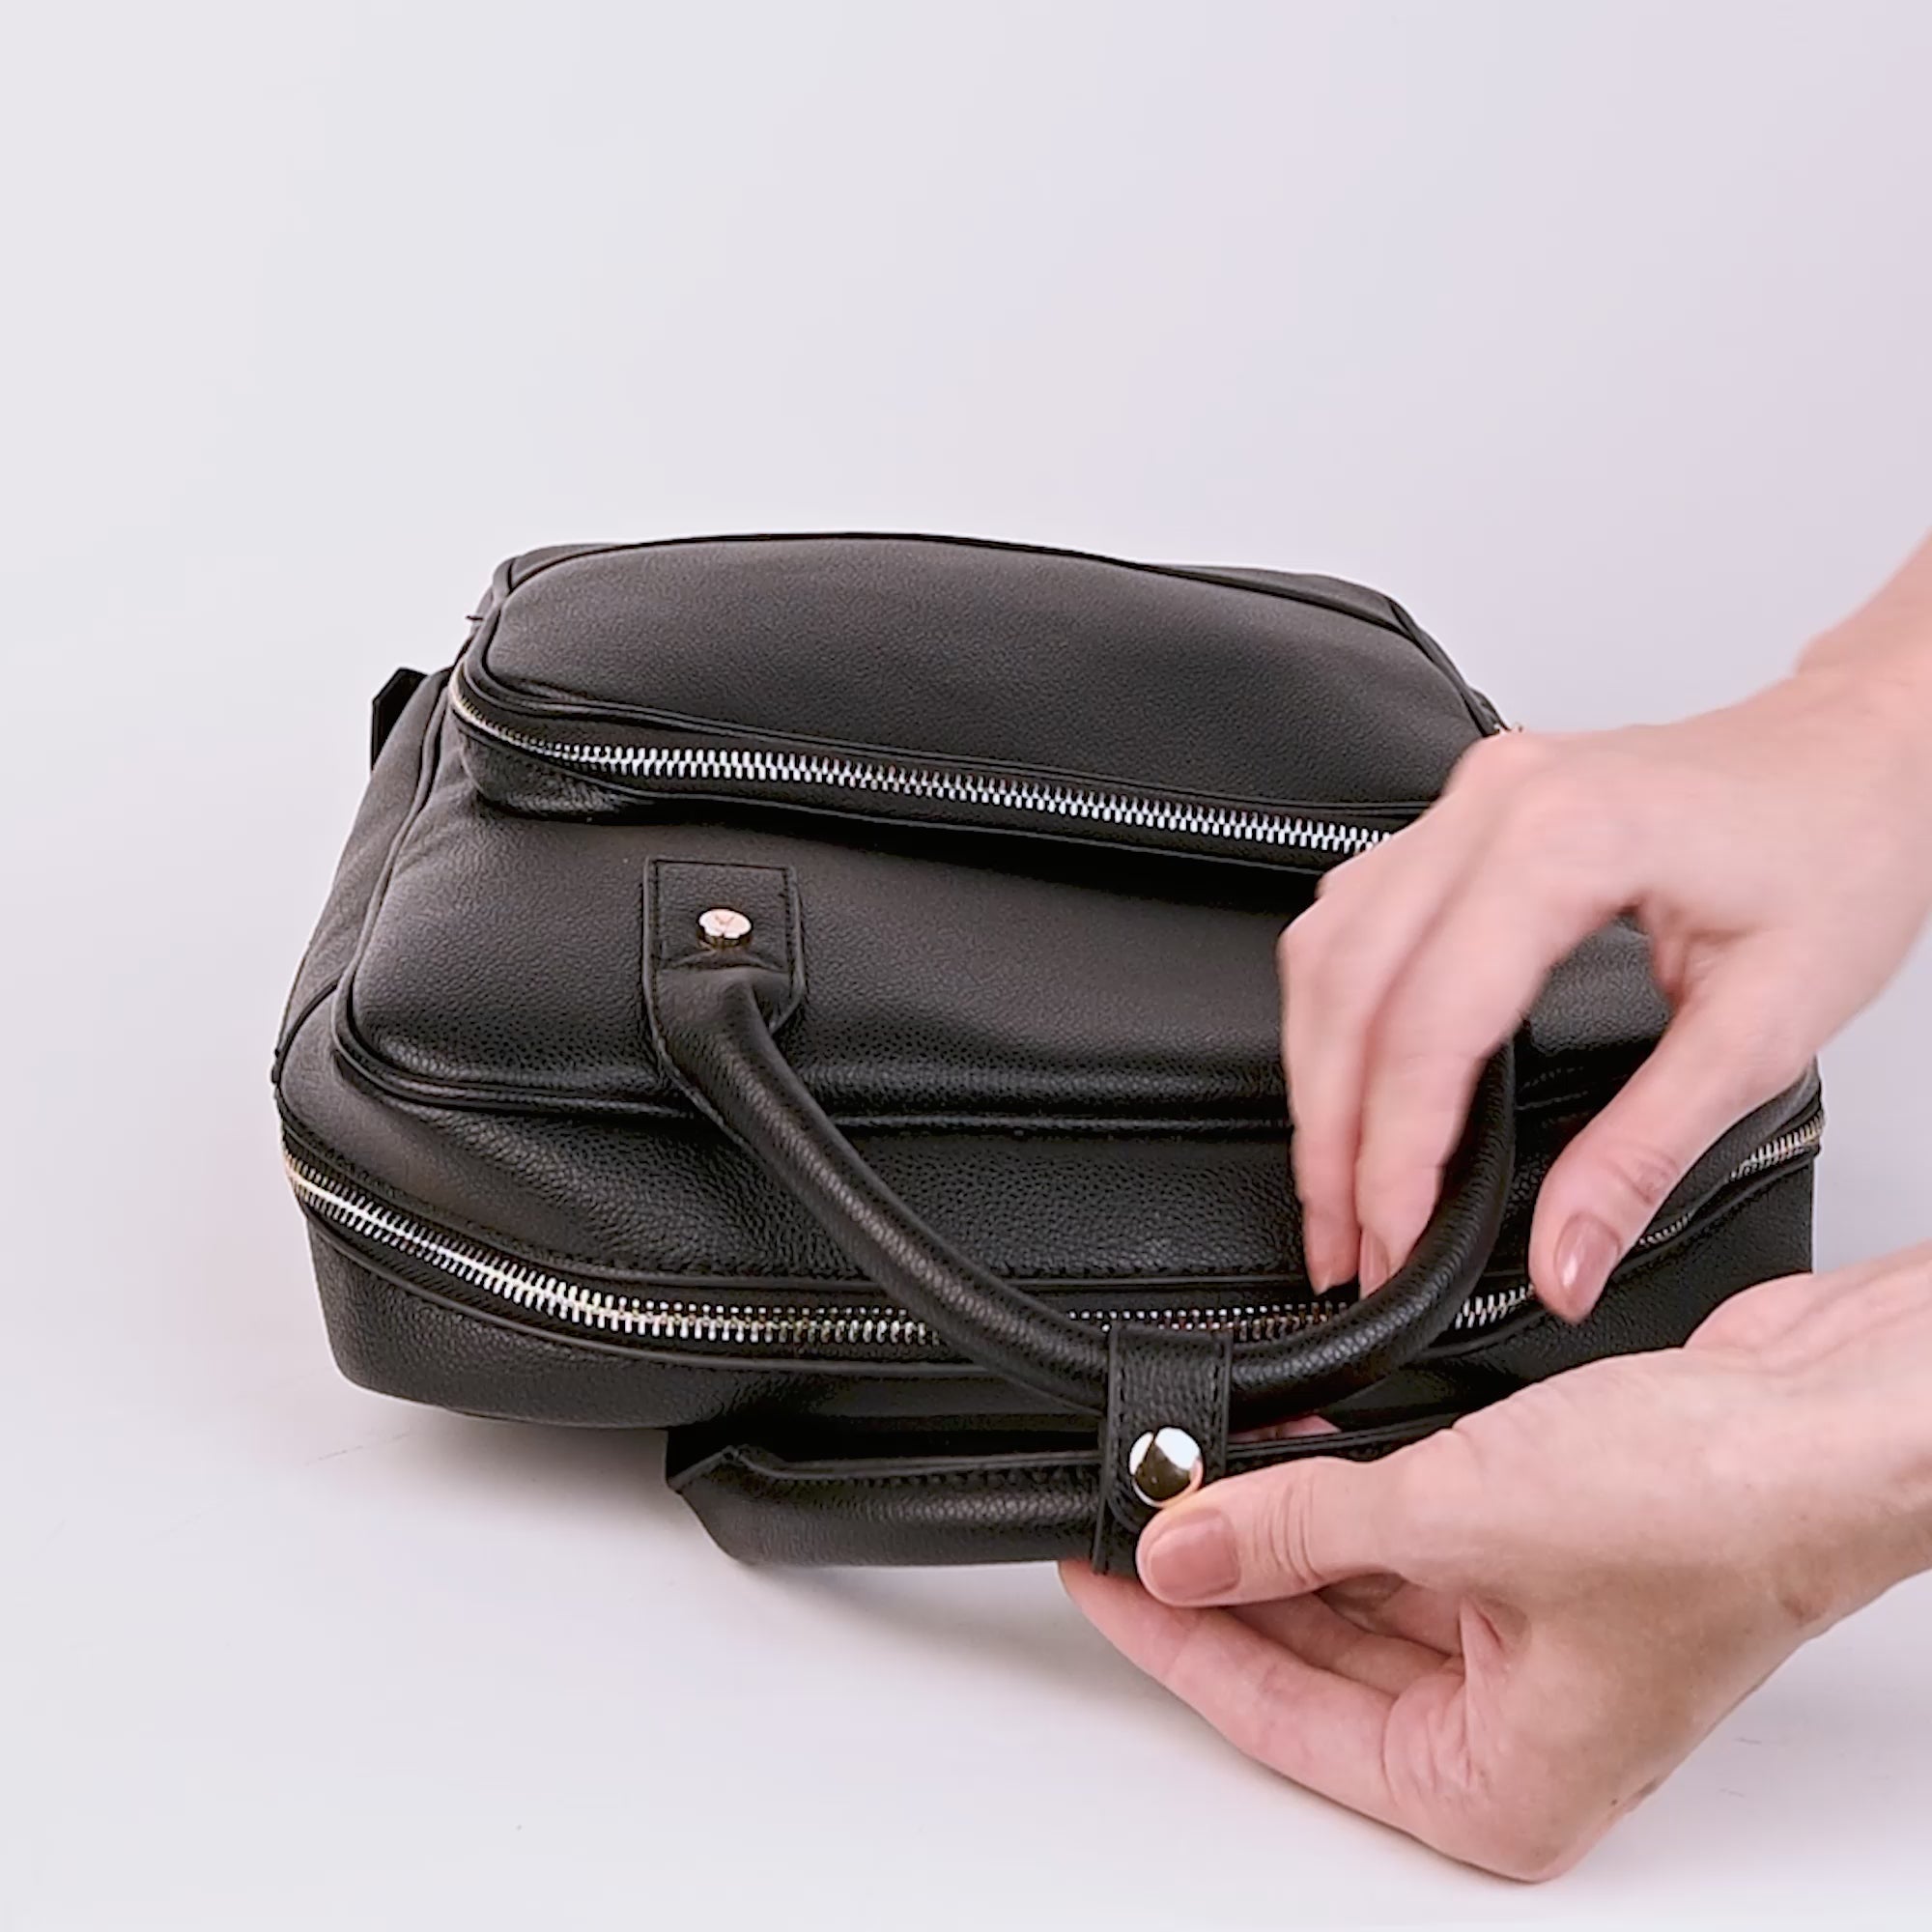 The Enchanting | Leather Backpack for Women/Men | Black Leather Laptop  Backpack